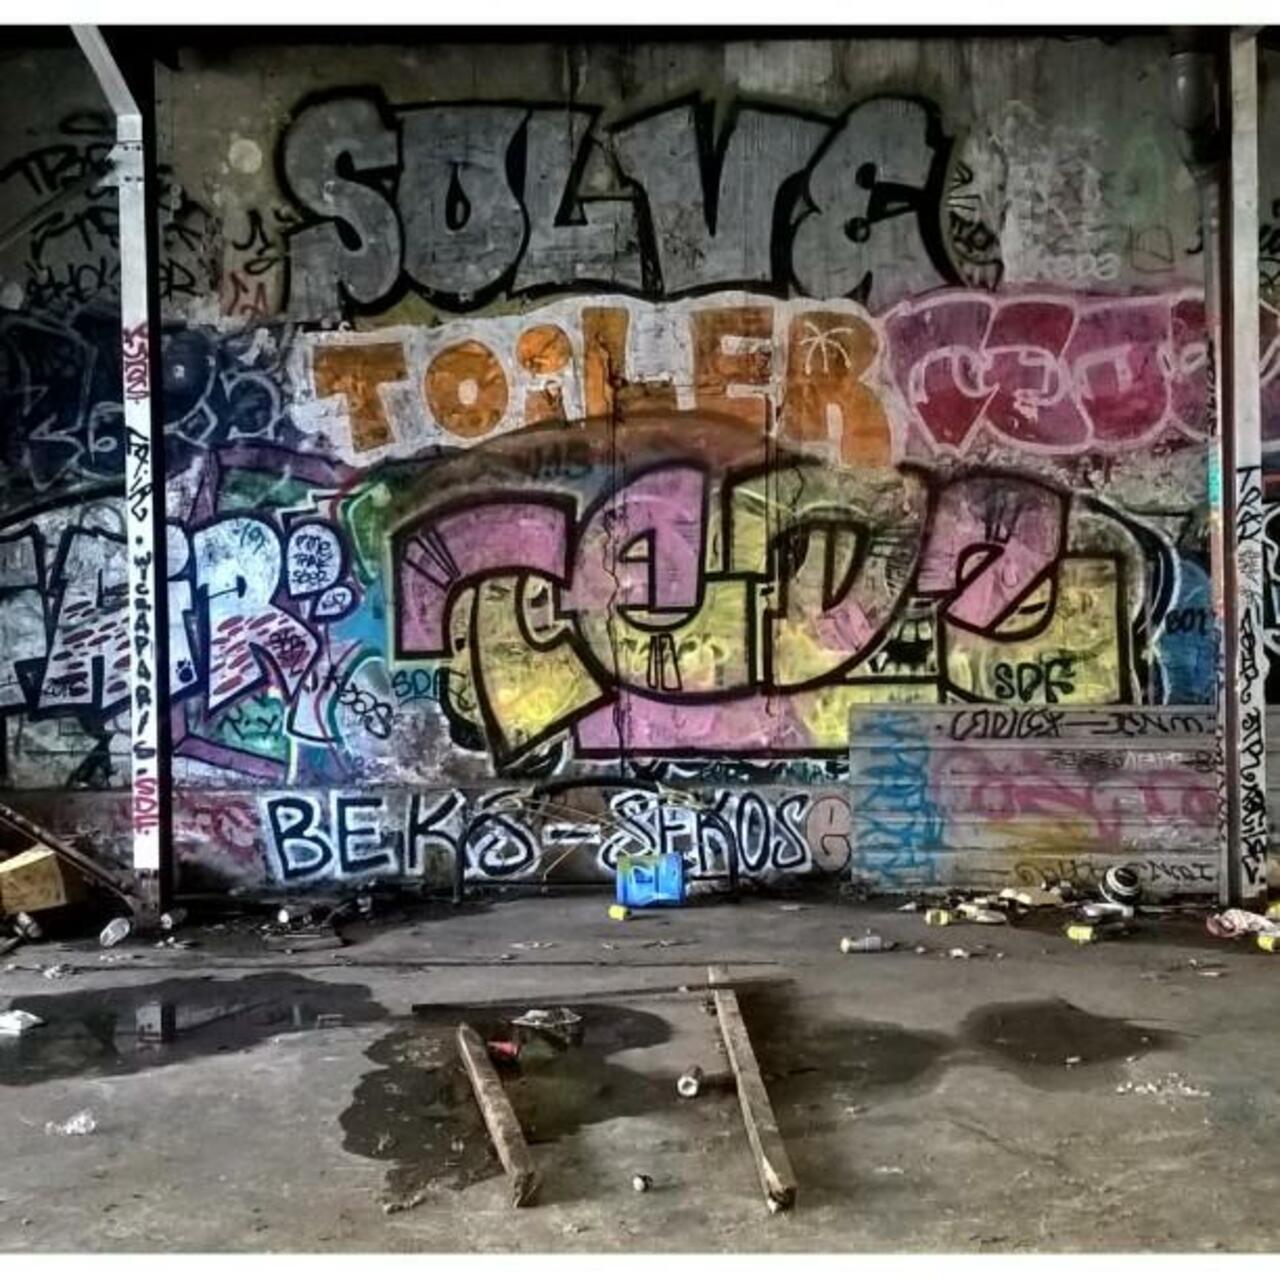 #streetart #graffiti #graff #art #fatcap #bombing #sprayart #spraycanart #wallart #handstyle #lettering #urbanart #… http://t.co/IrA6FIFcfu